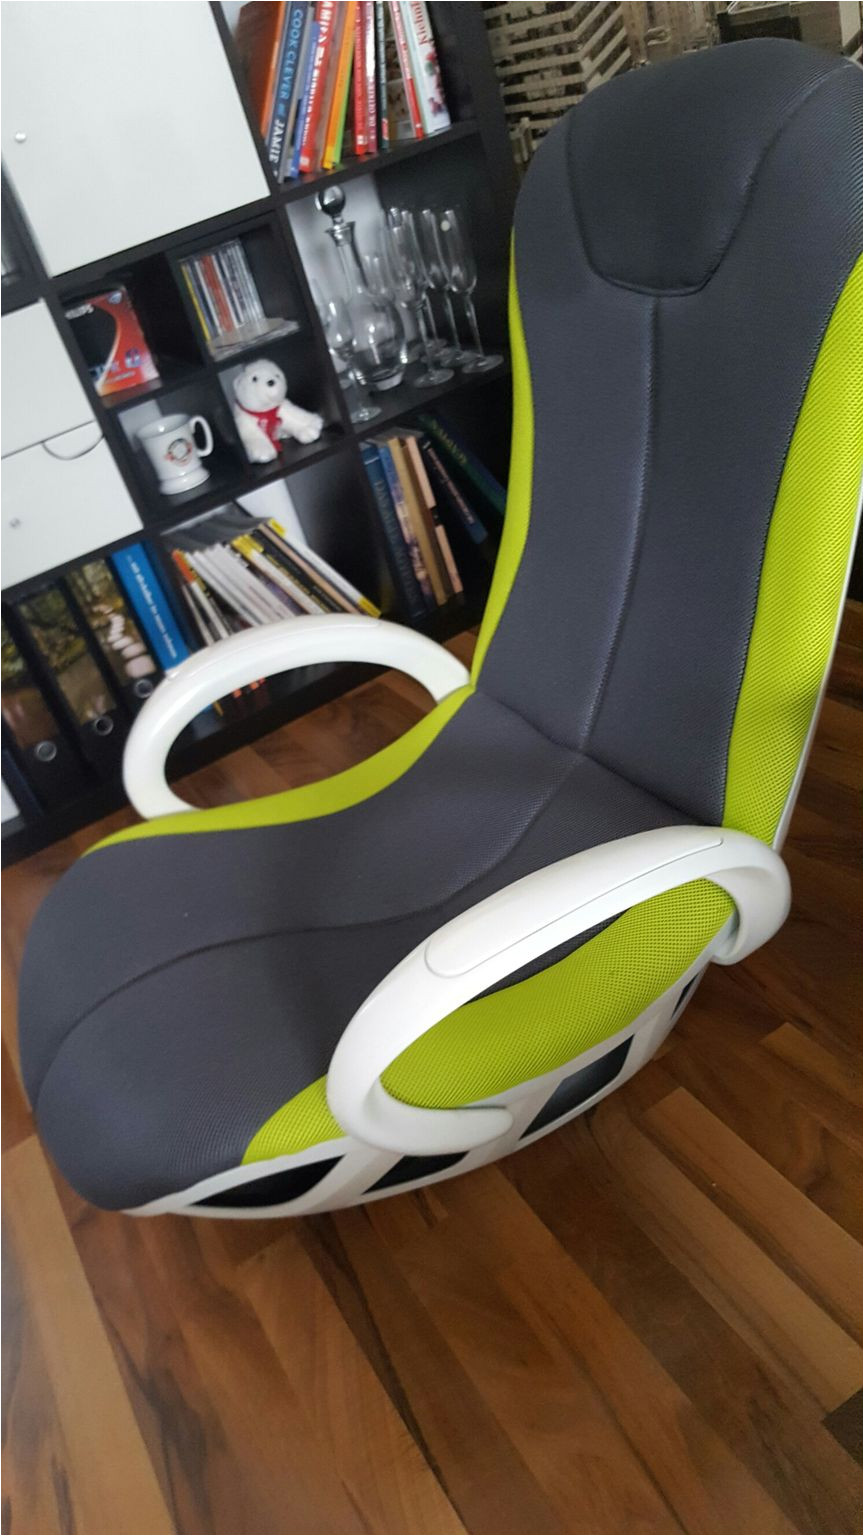 soundsessel gaming chair jpg